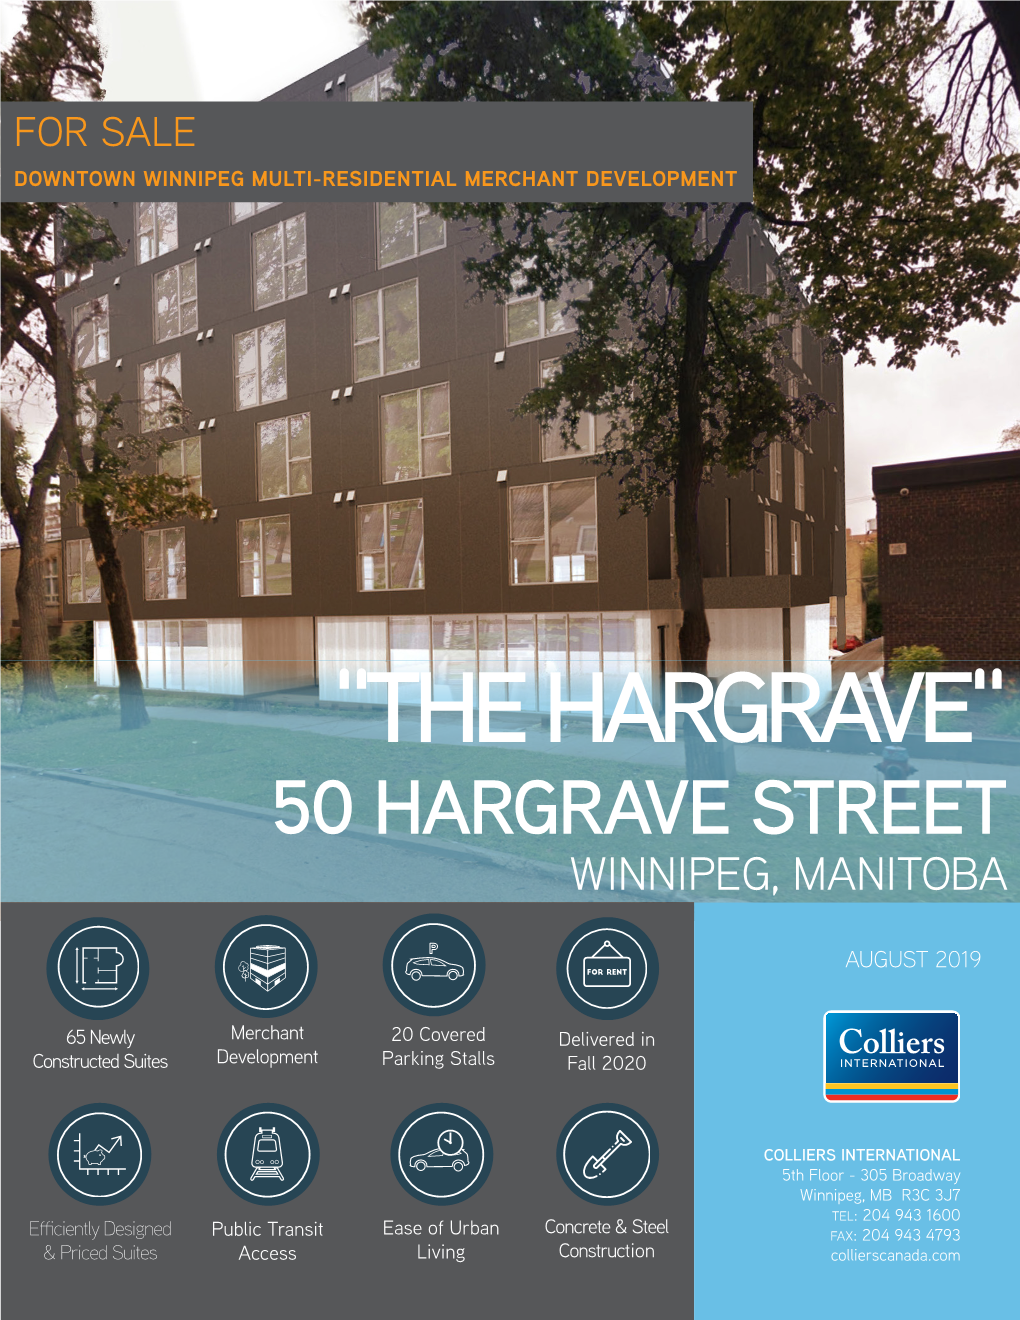 "The Hargrave" 50 Hargrave Street Winnipeg, Manitoba F